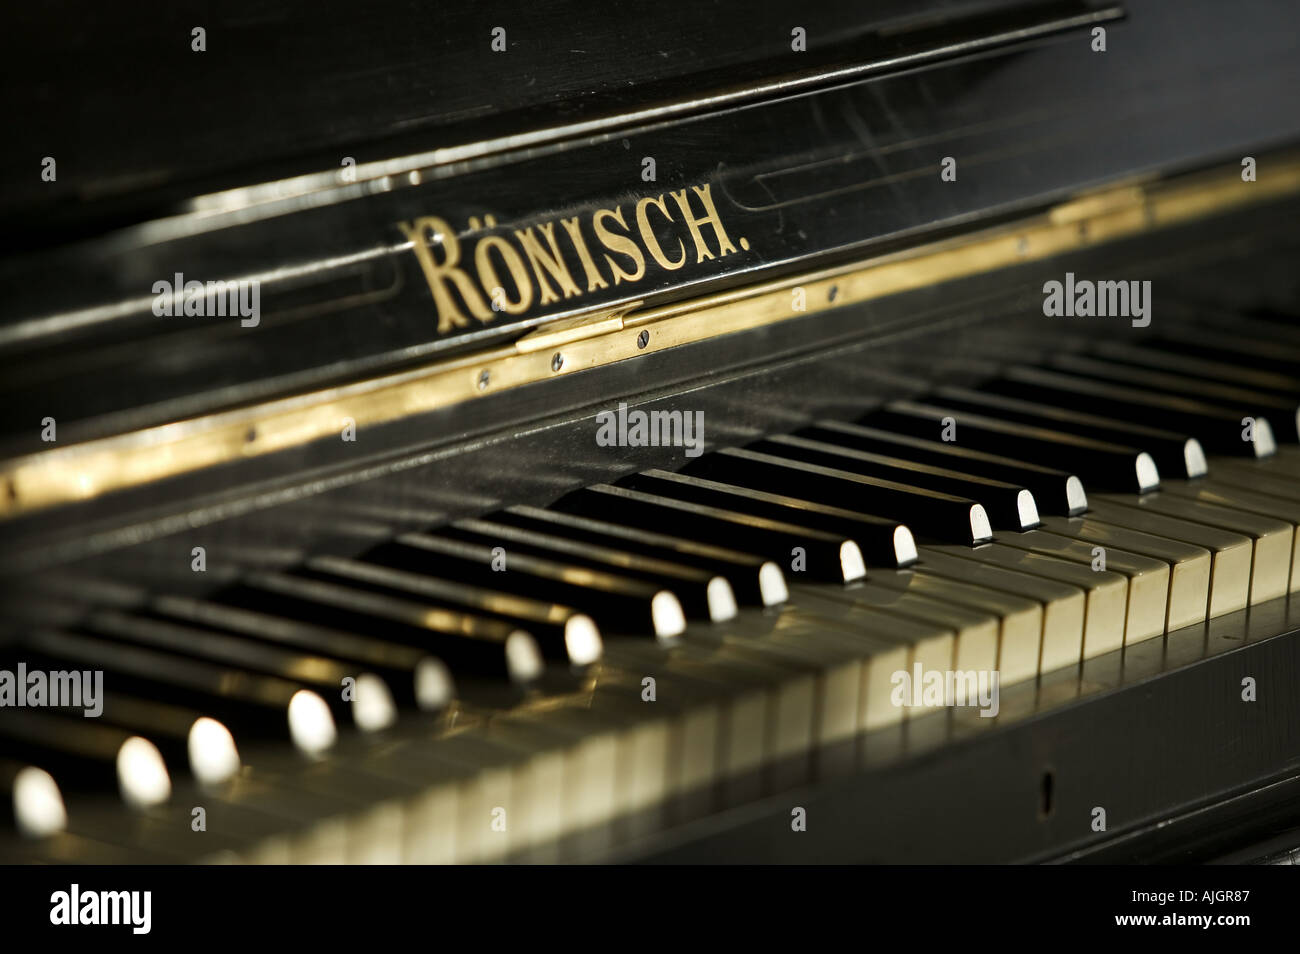 Ronisch piano 115 years old Stock Photo - Alamy